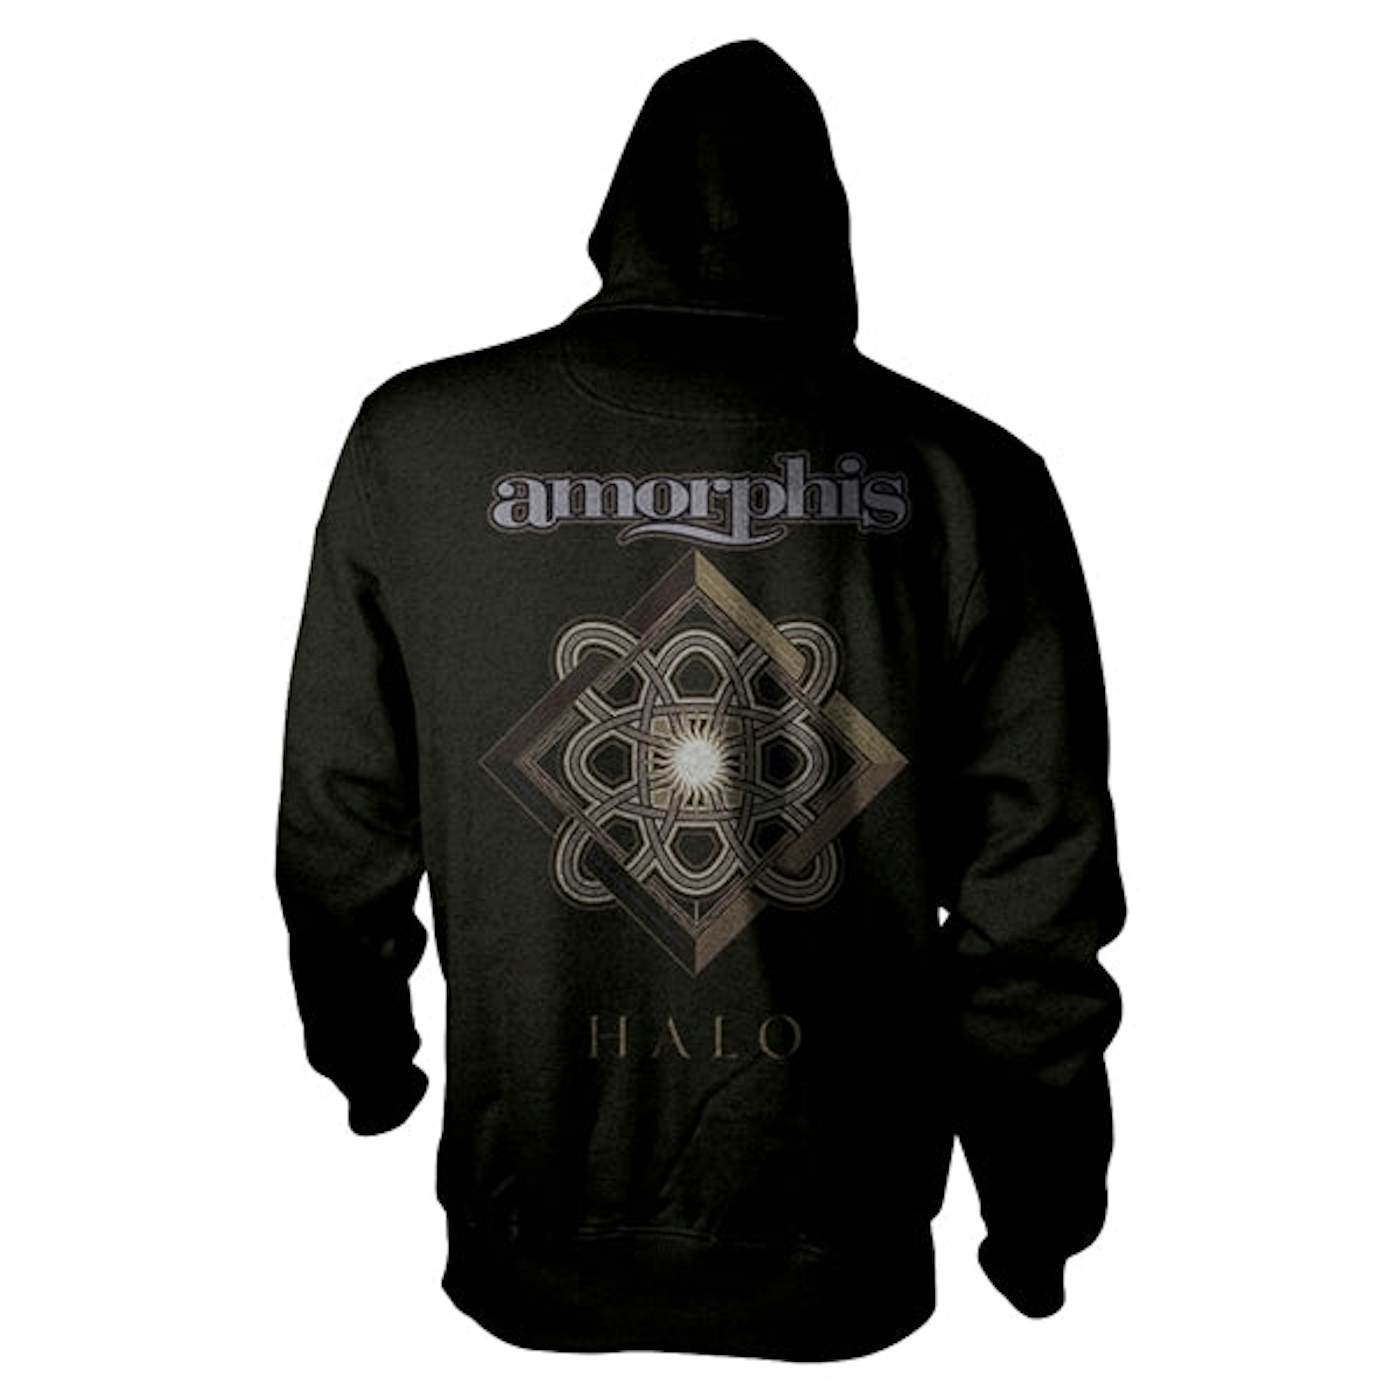 Amorphis Hoodie - Halo